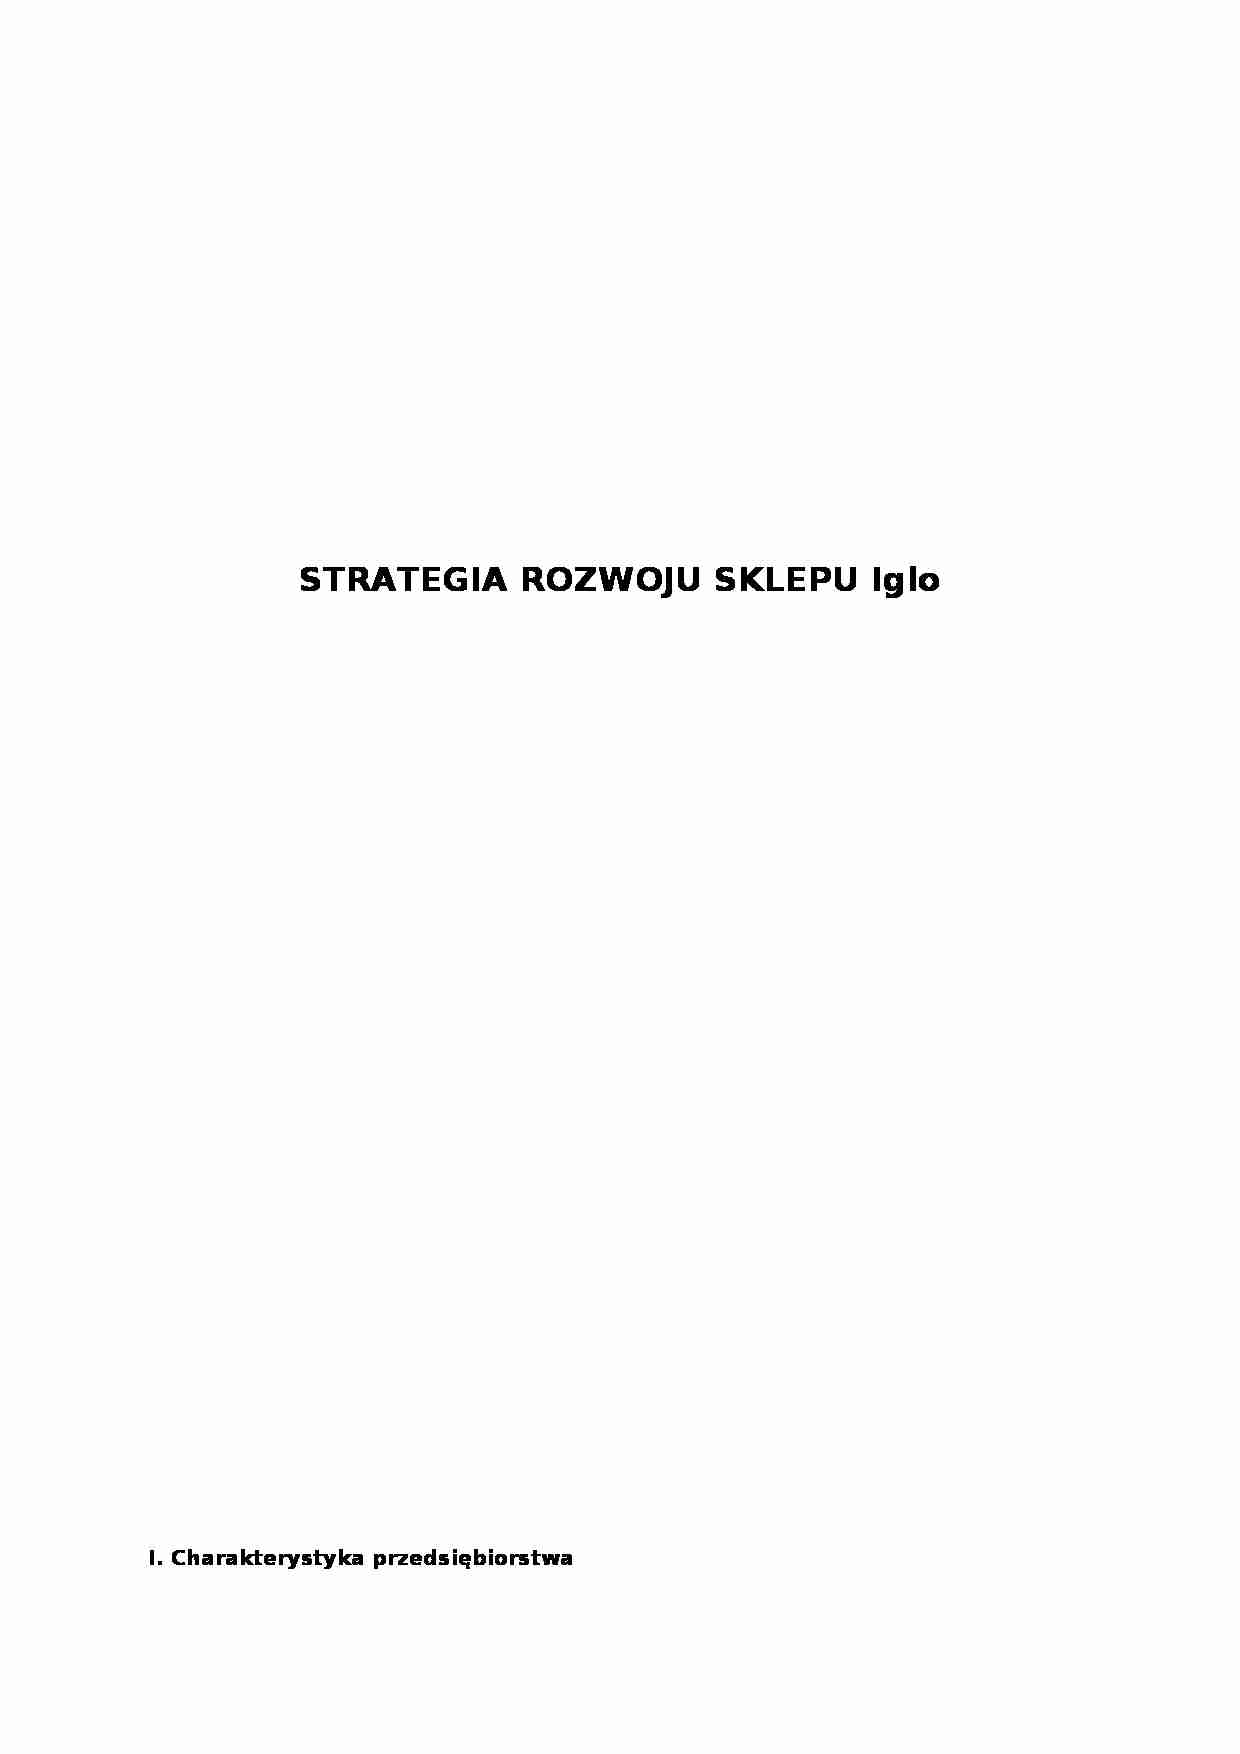 Strategia rozwoju sklepu Iglo (16 stron).doc - strona 1